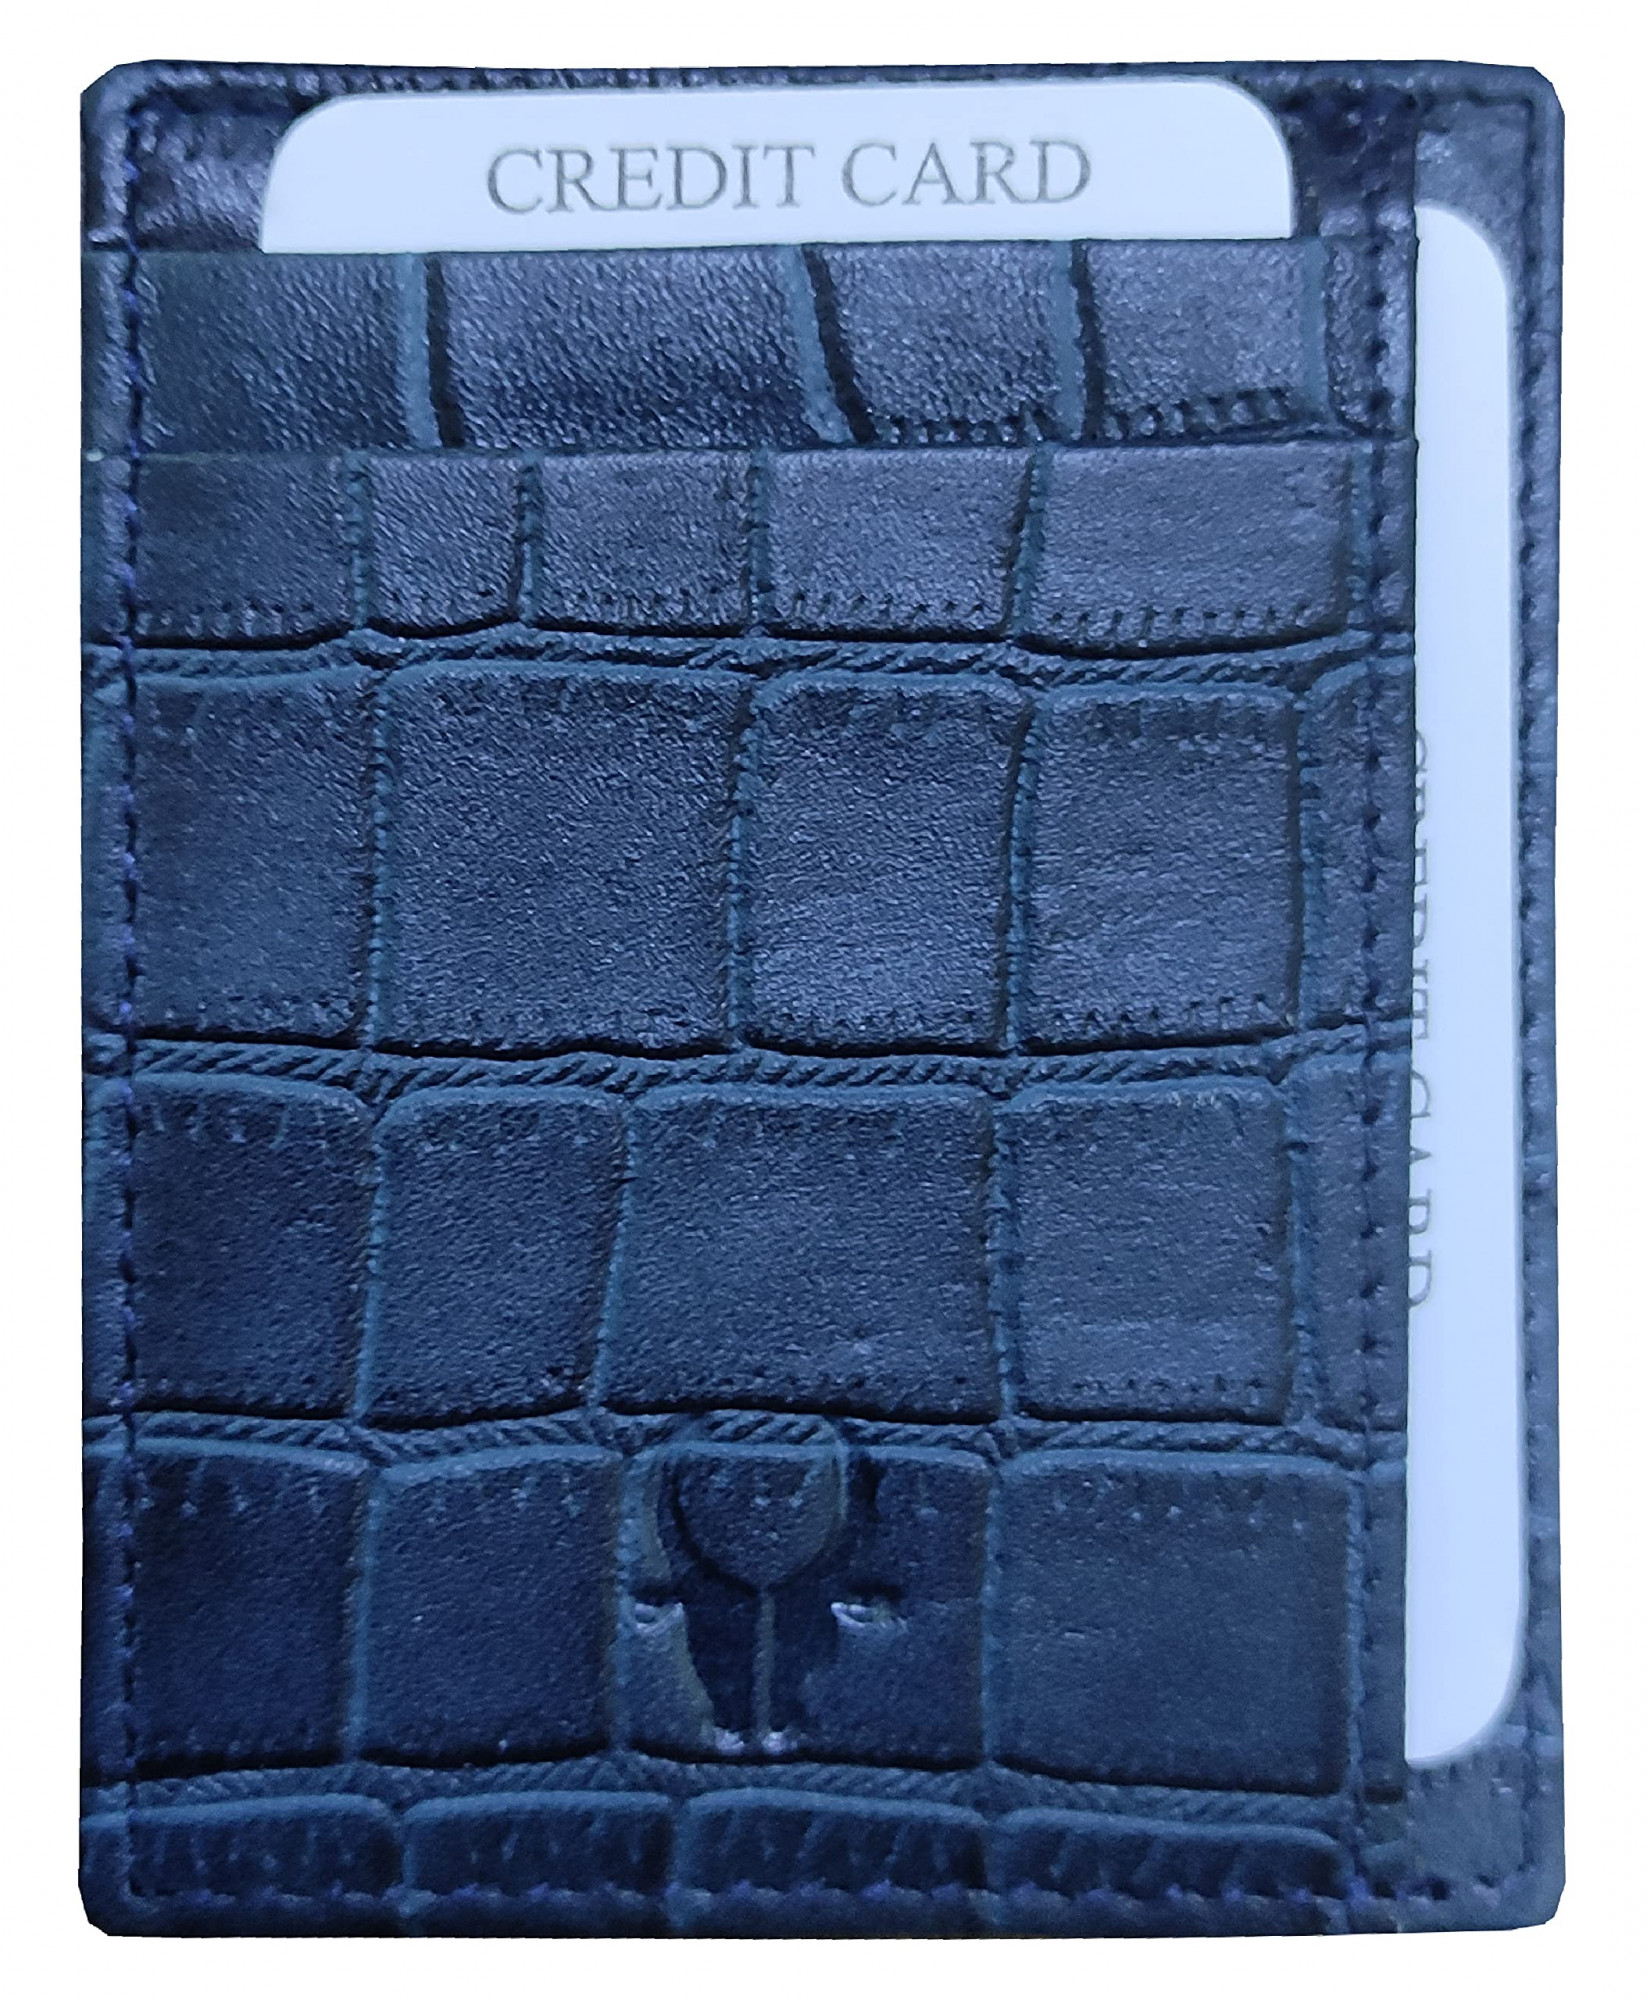 WildHorn Blue Leather Men's Wallet (699710)